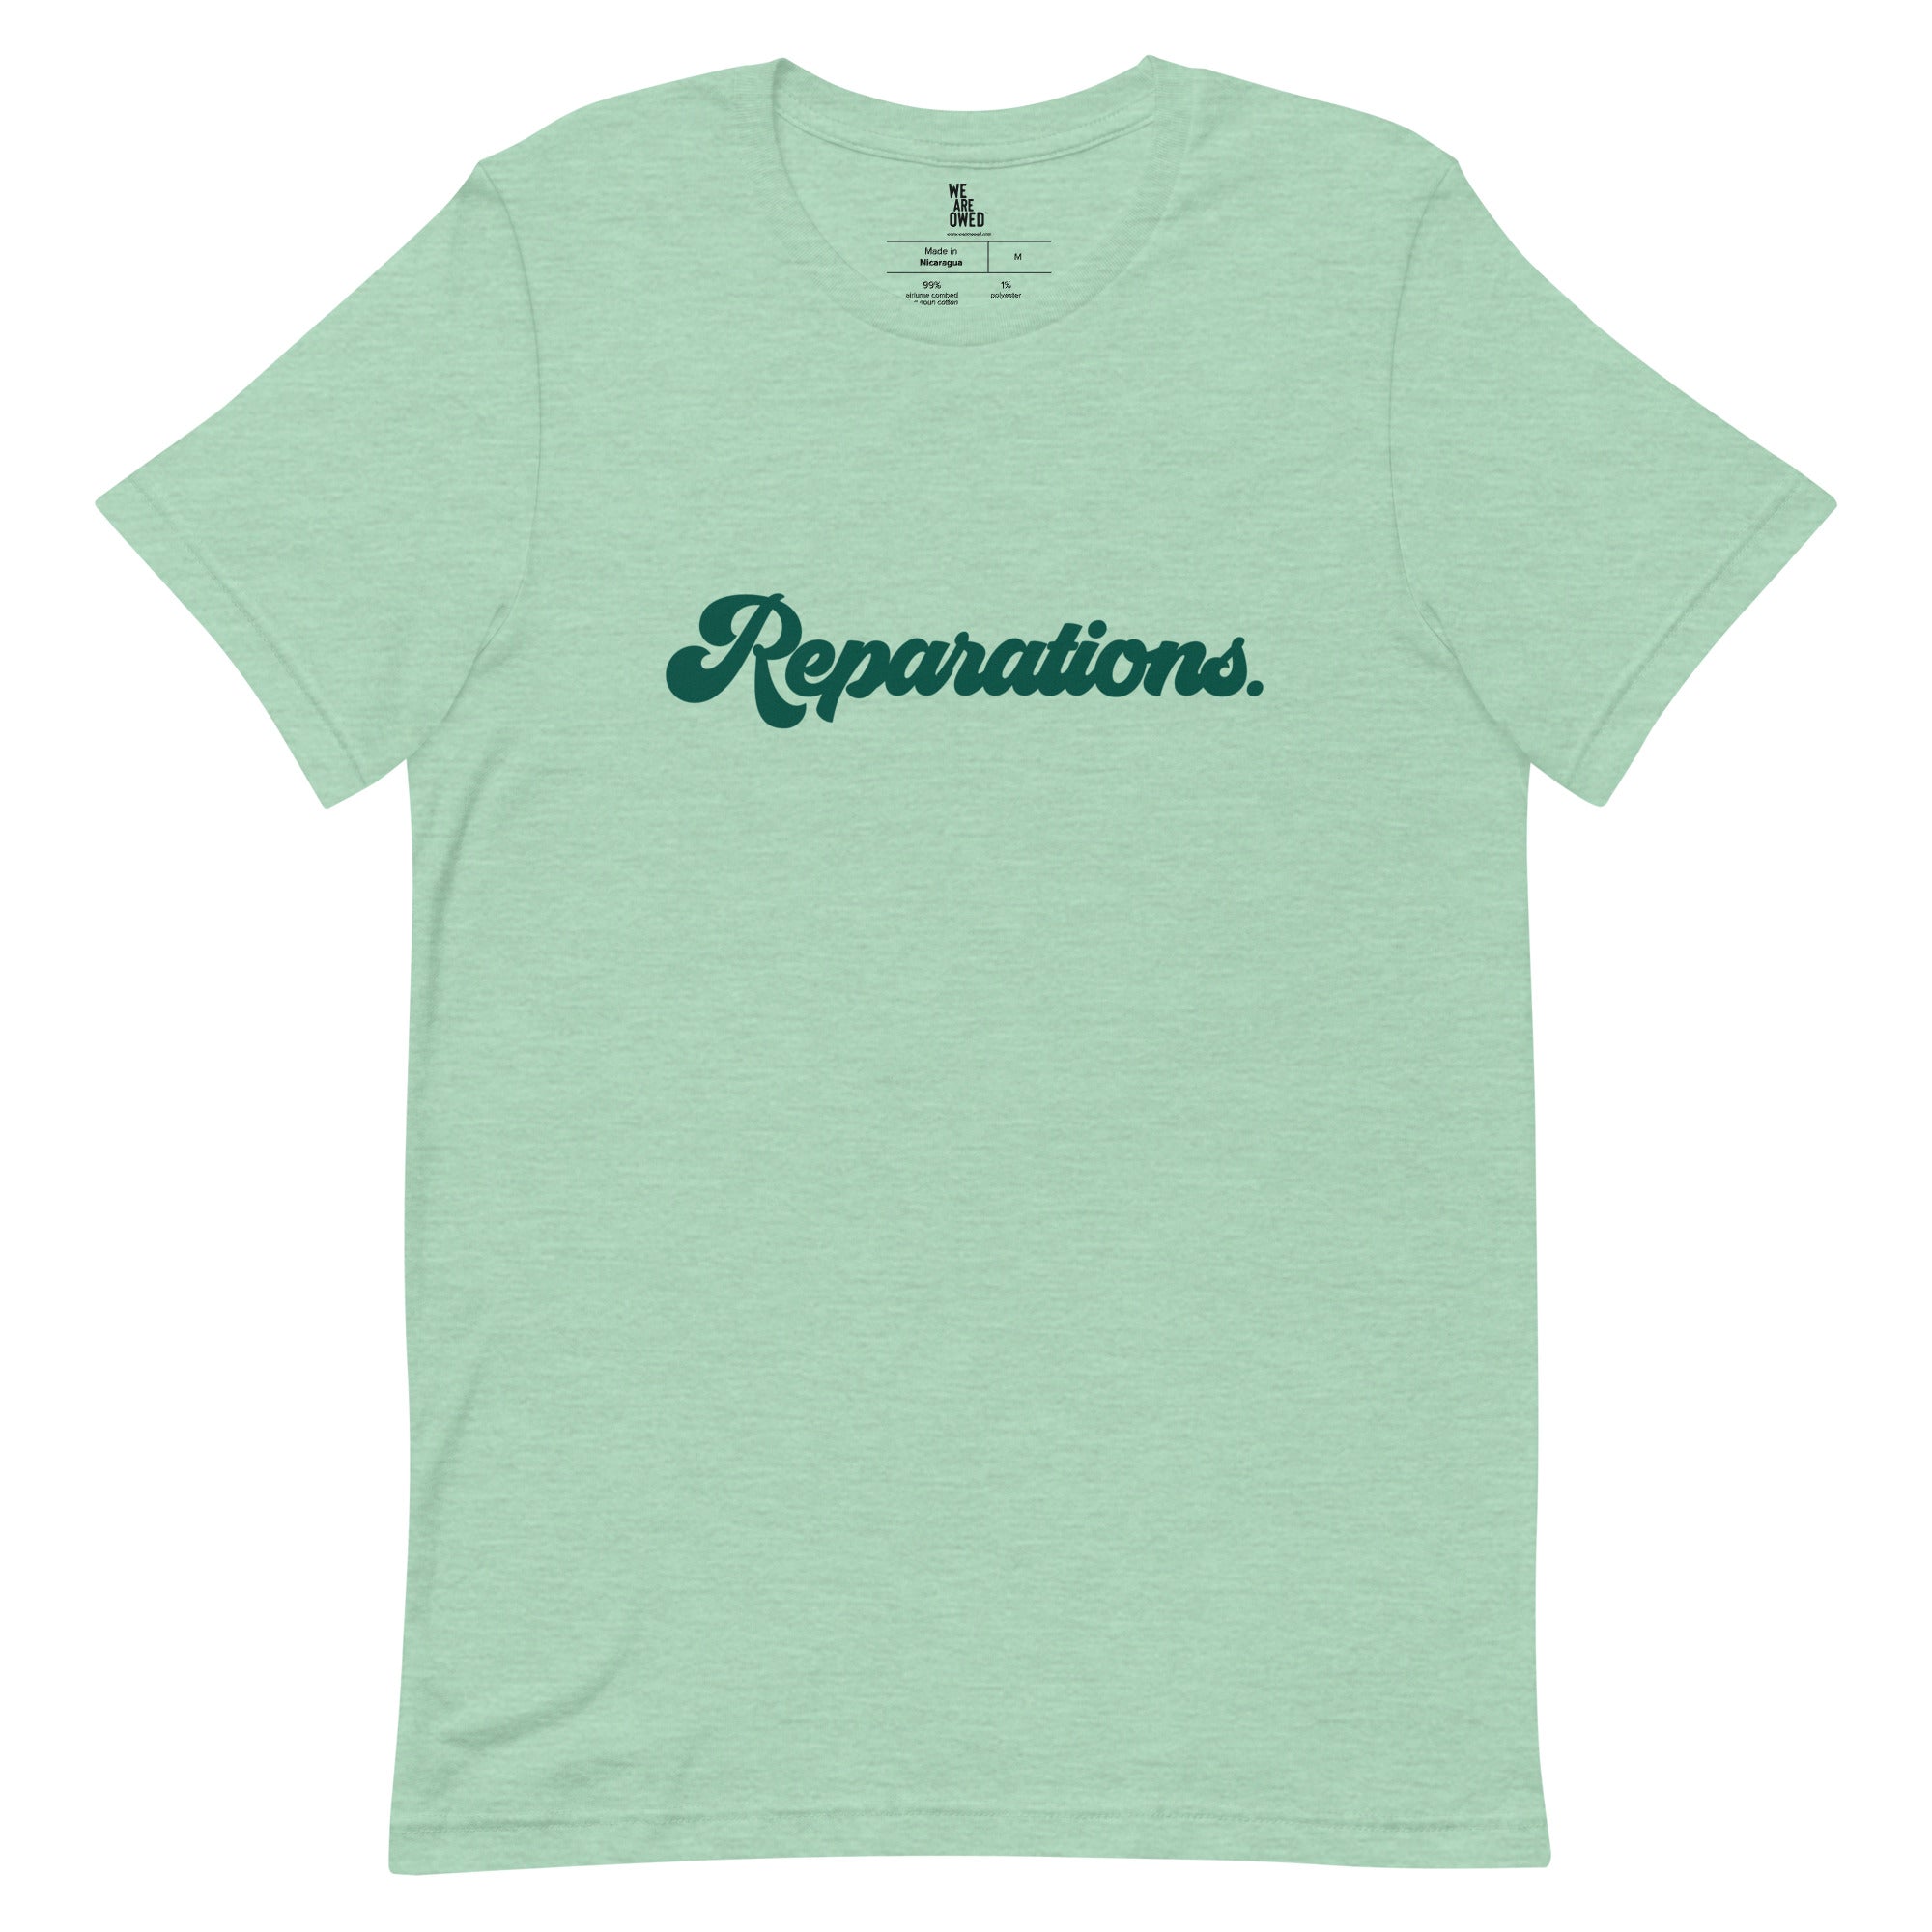 Reparations Retro Unisex t-shirt - Mint